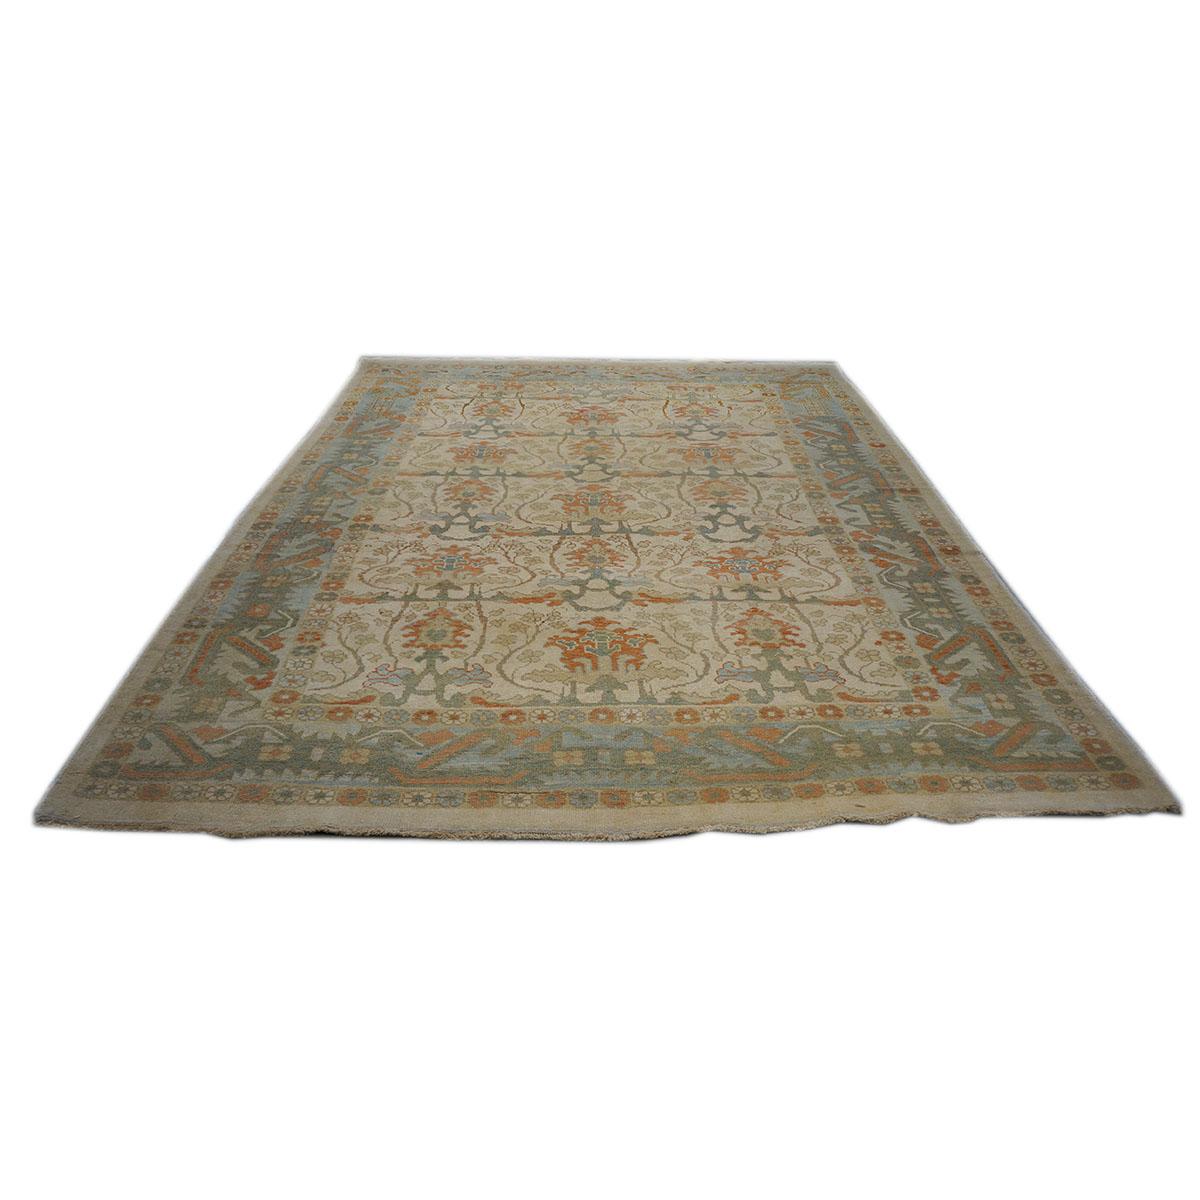 Oushak 21st Century William Morris Donegal Carpet 10x13 Tan & Blue Handmade Area Rug For Sale